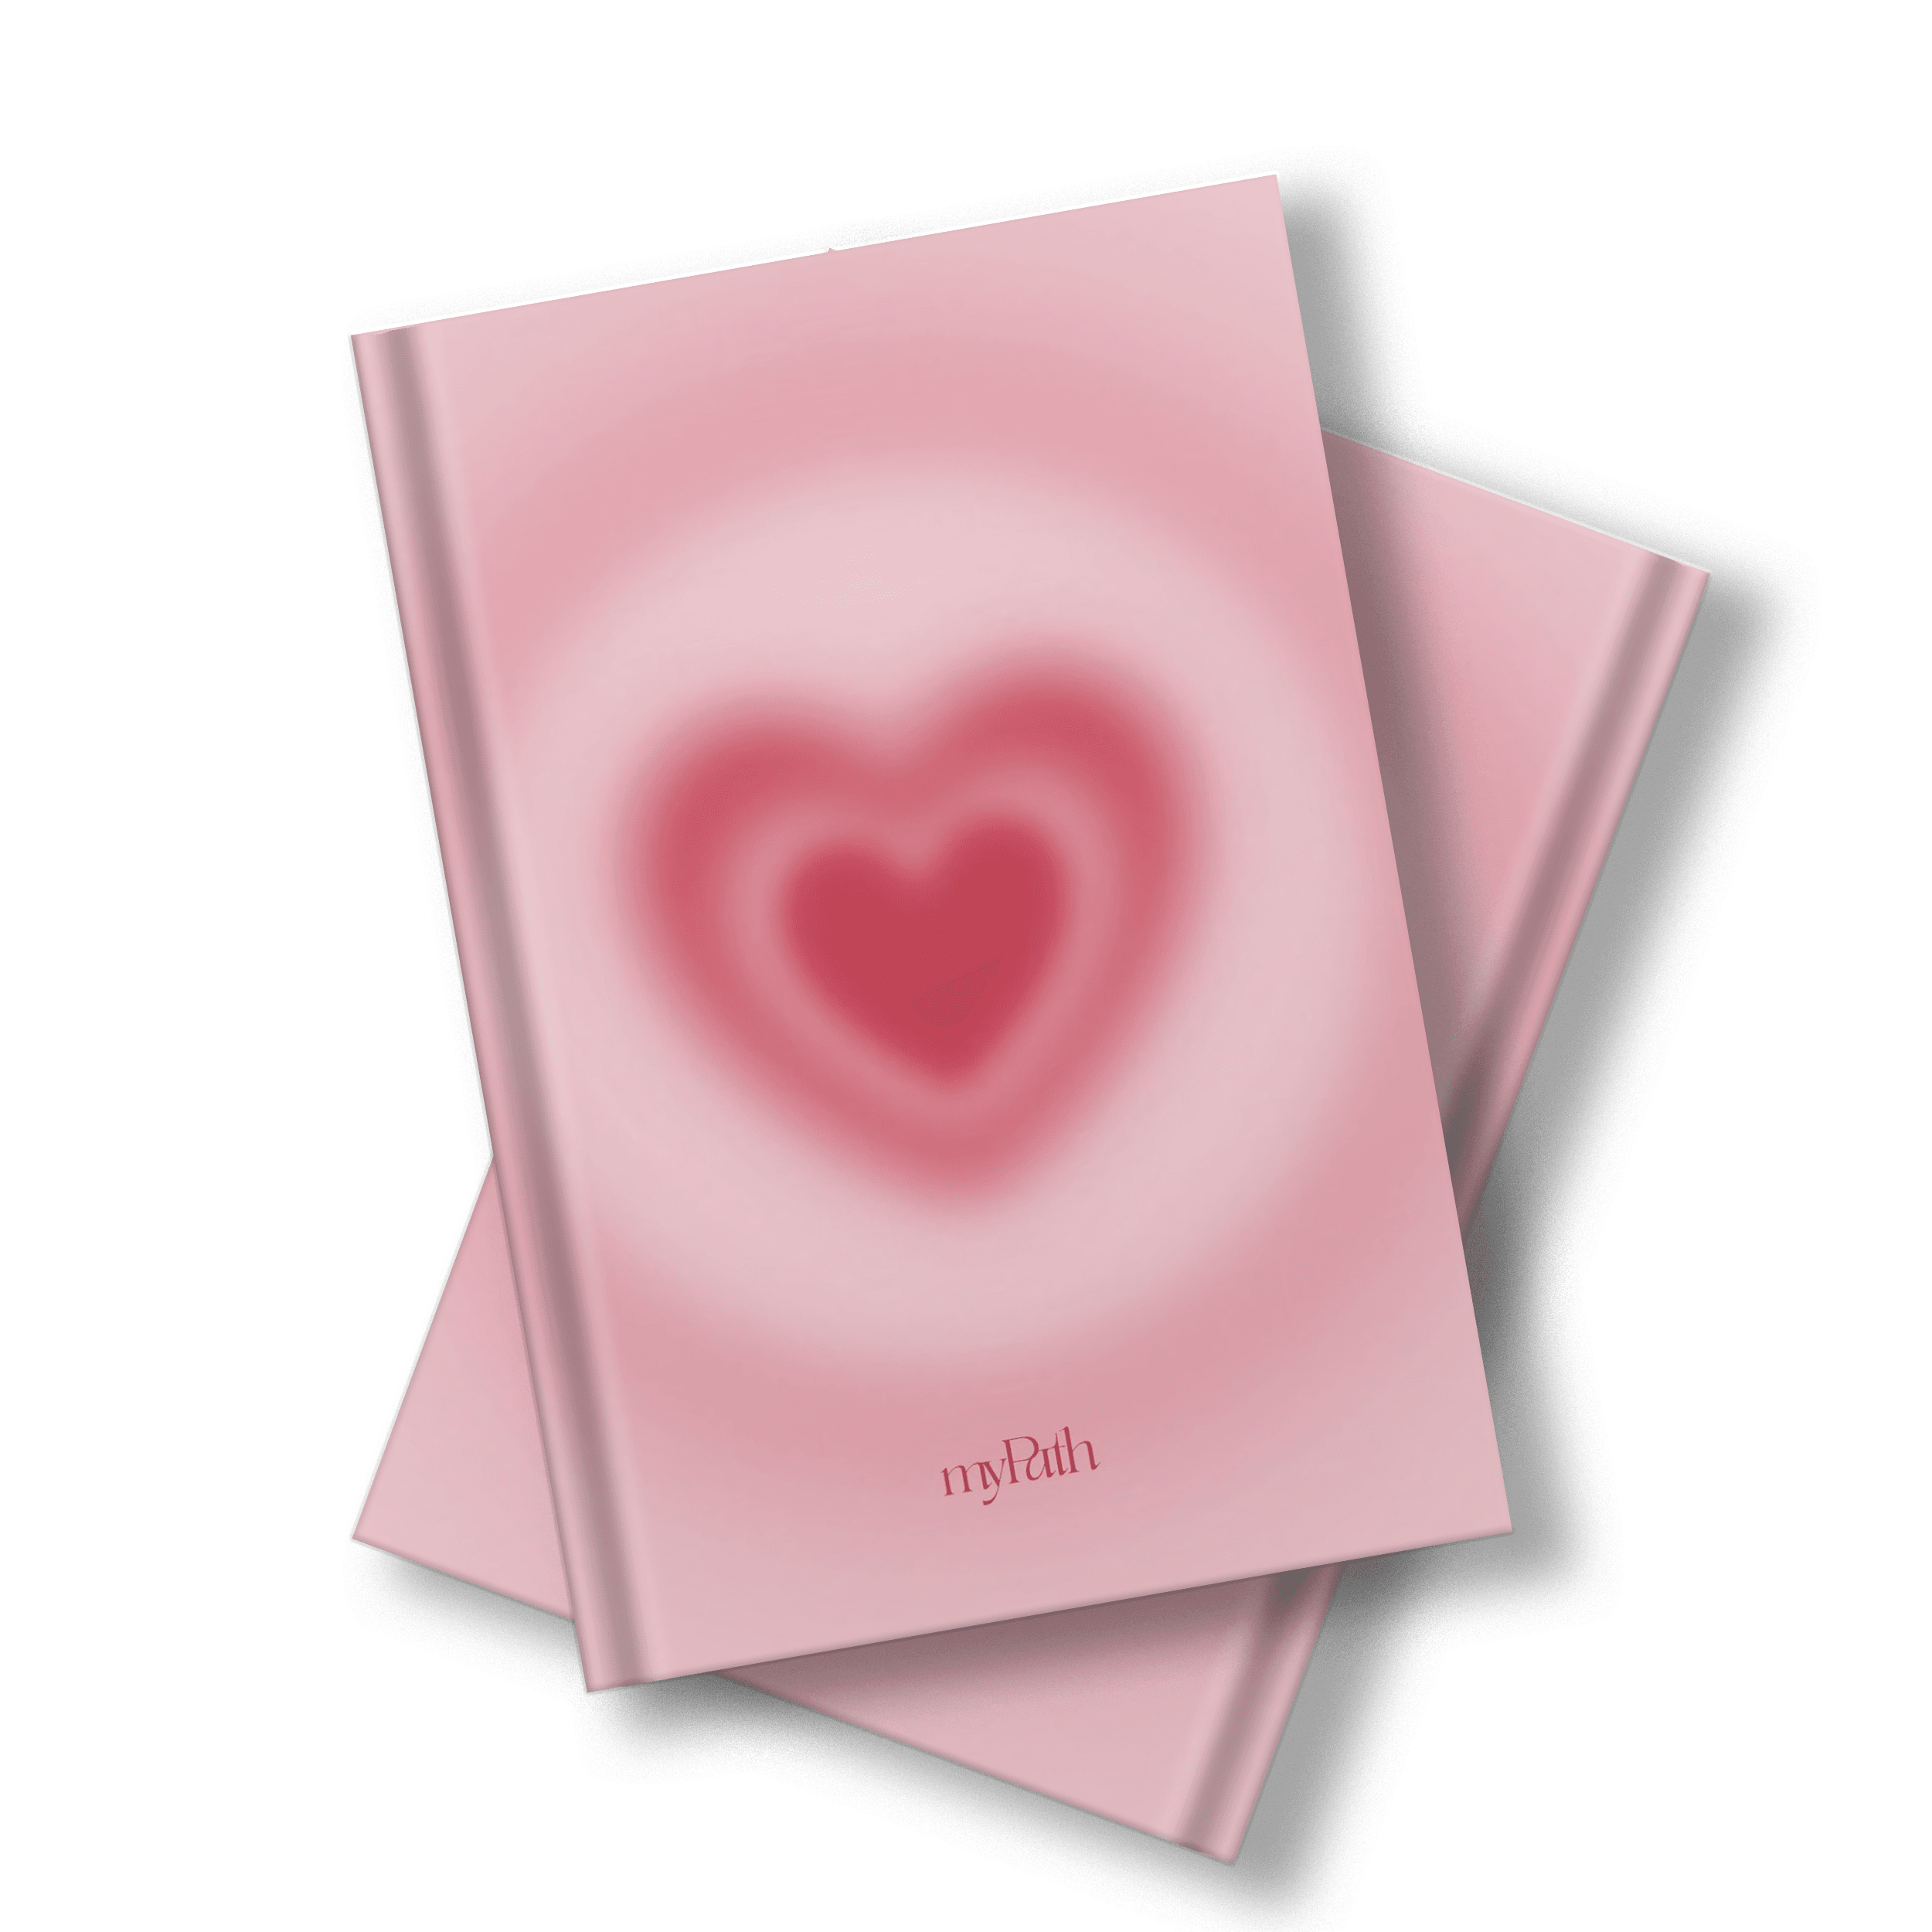 Valentine Journal (köşesi ezik)